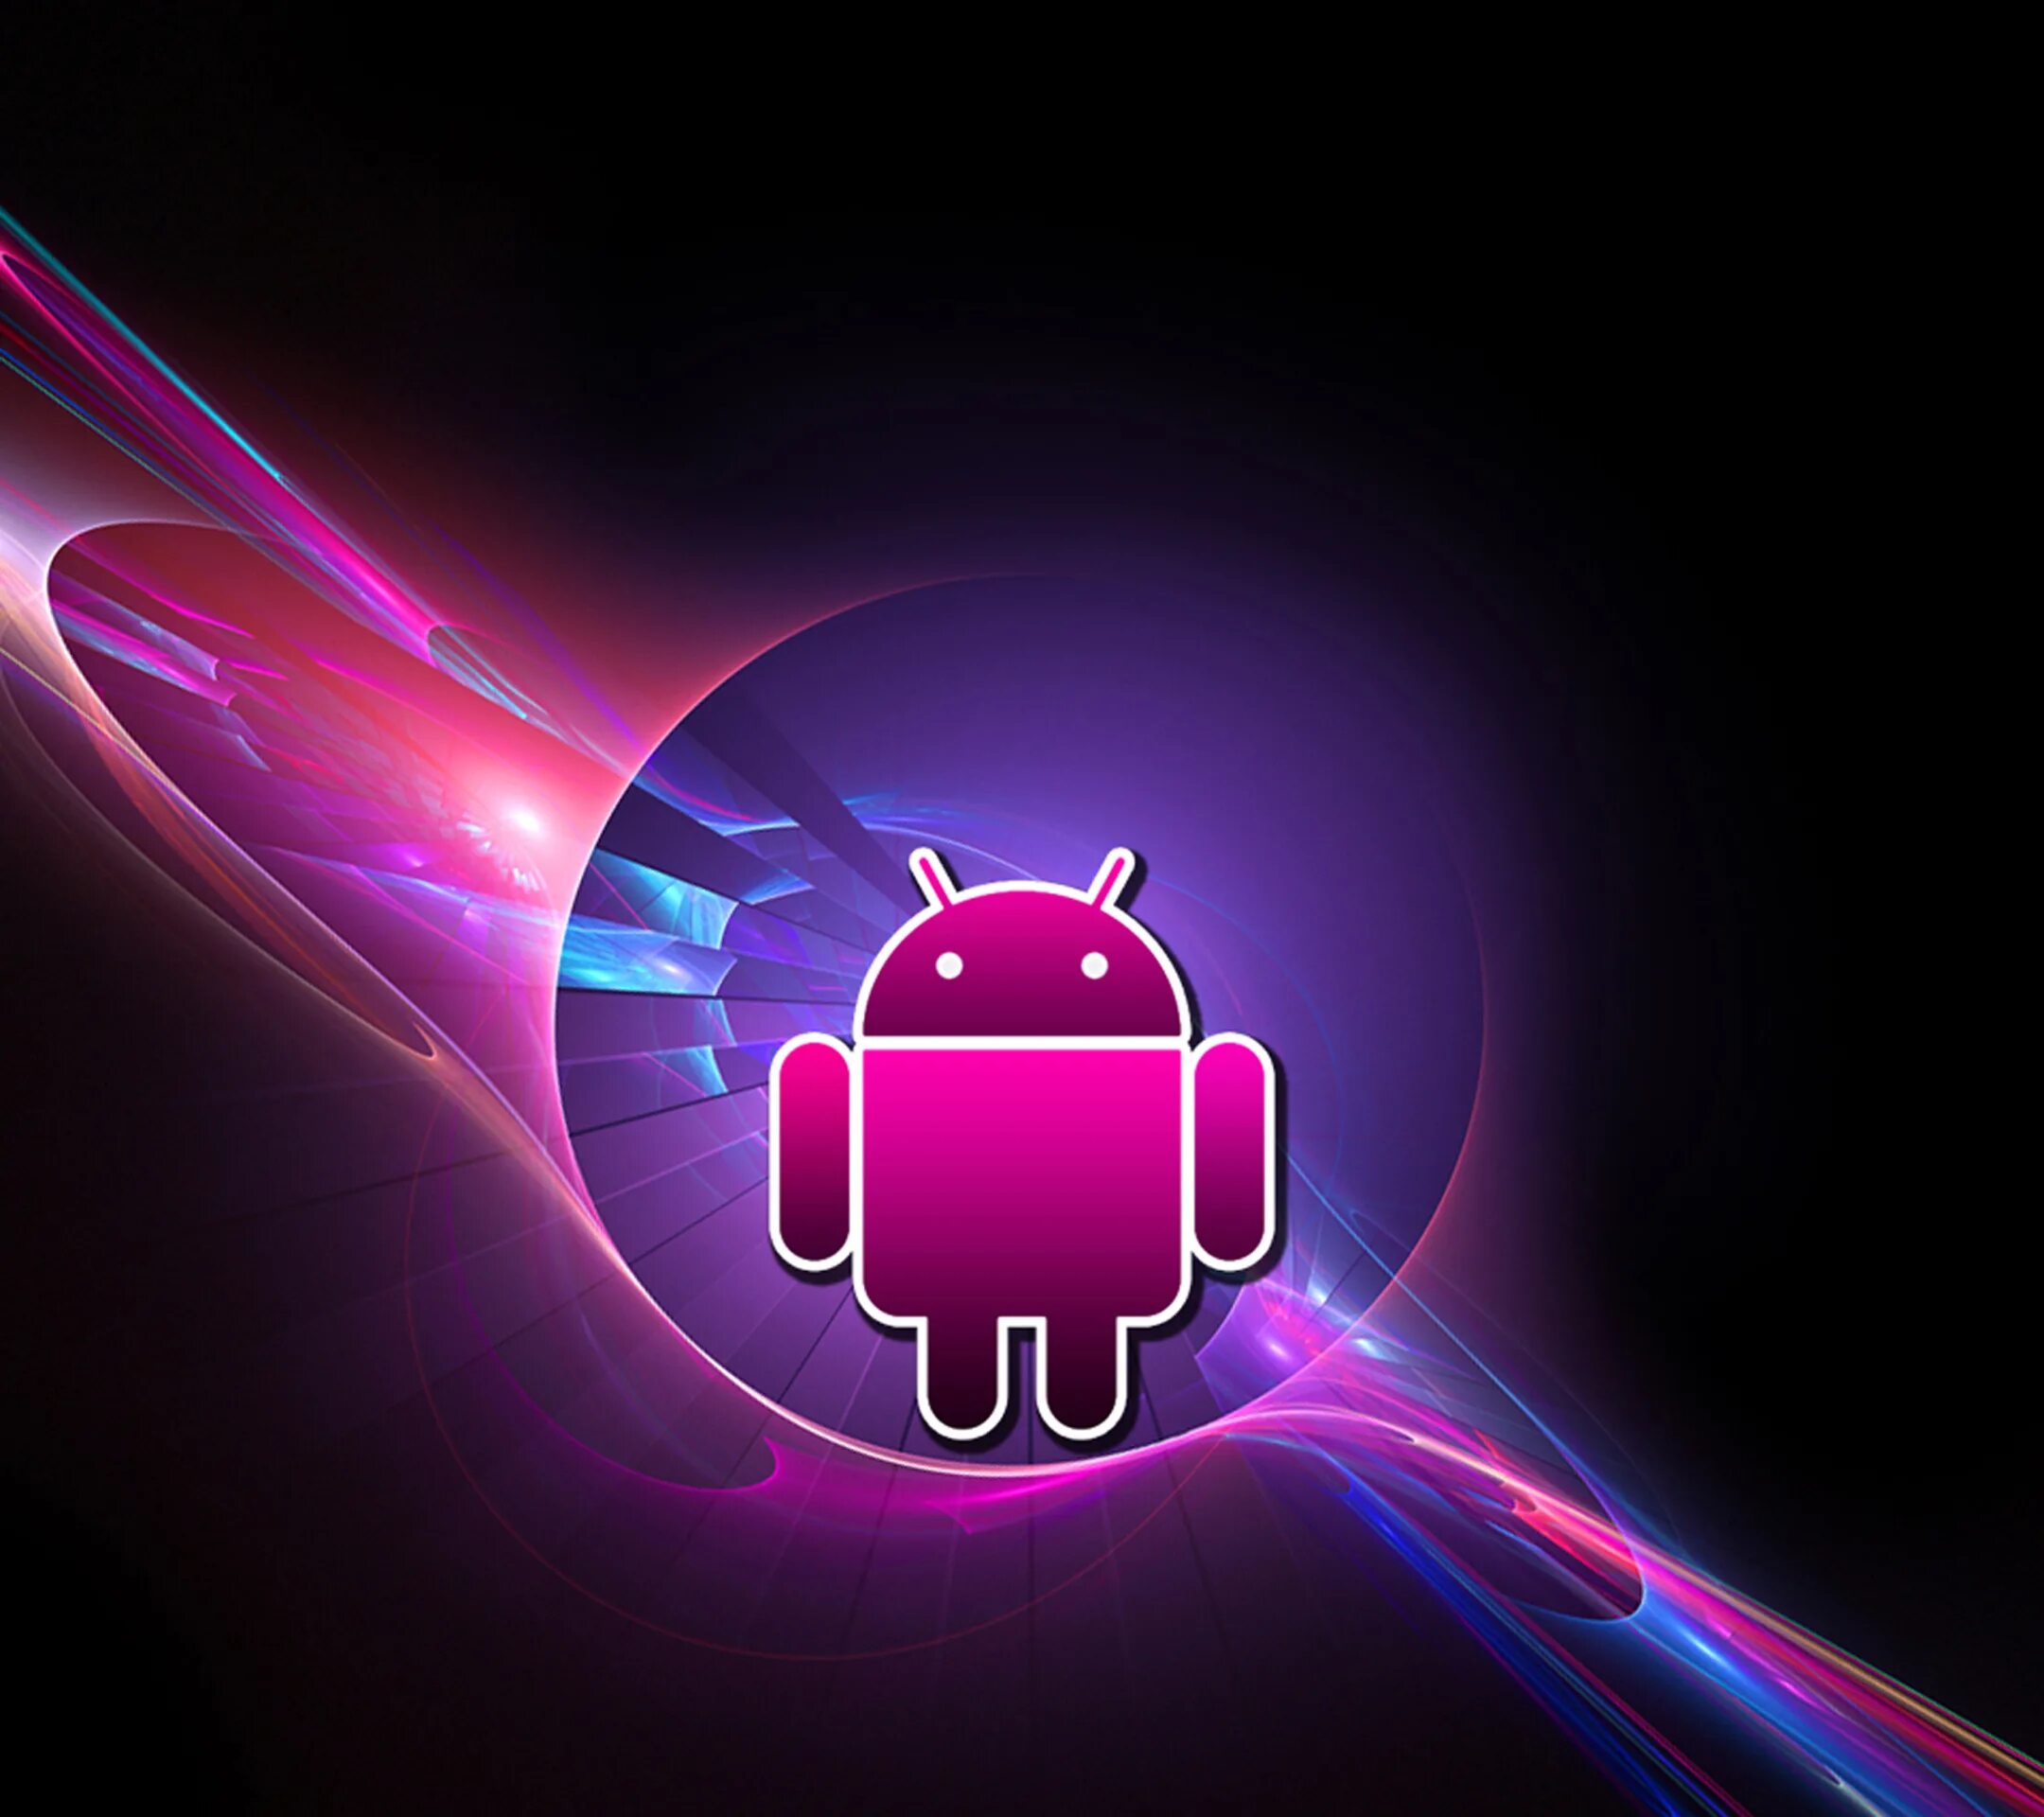 Андроид рс. Логотип андроид. Розовый андроид. Картинки на андроид. Заставка на андроид.